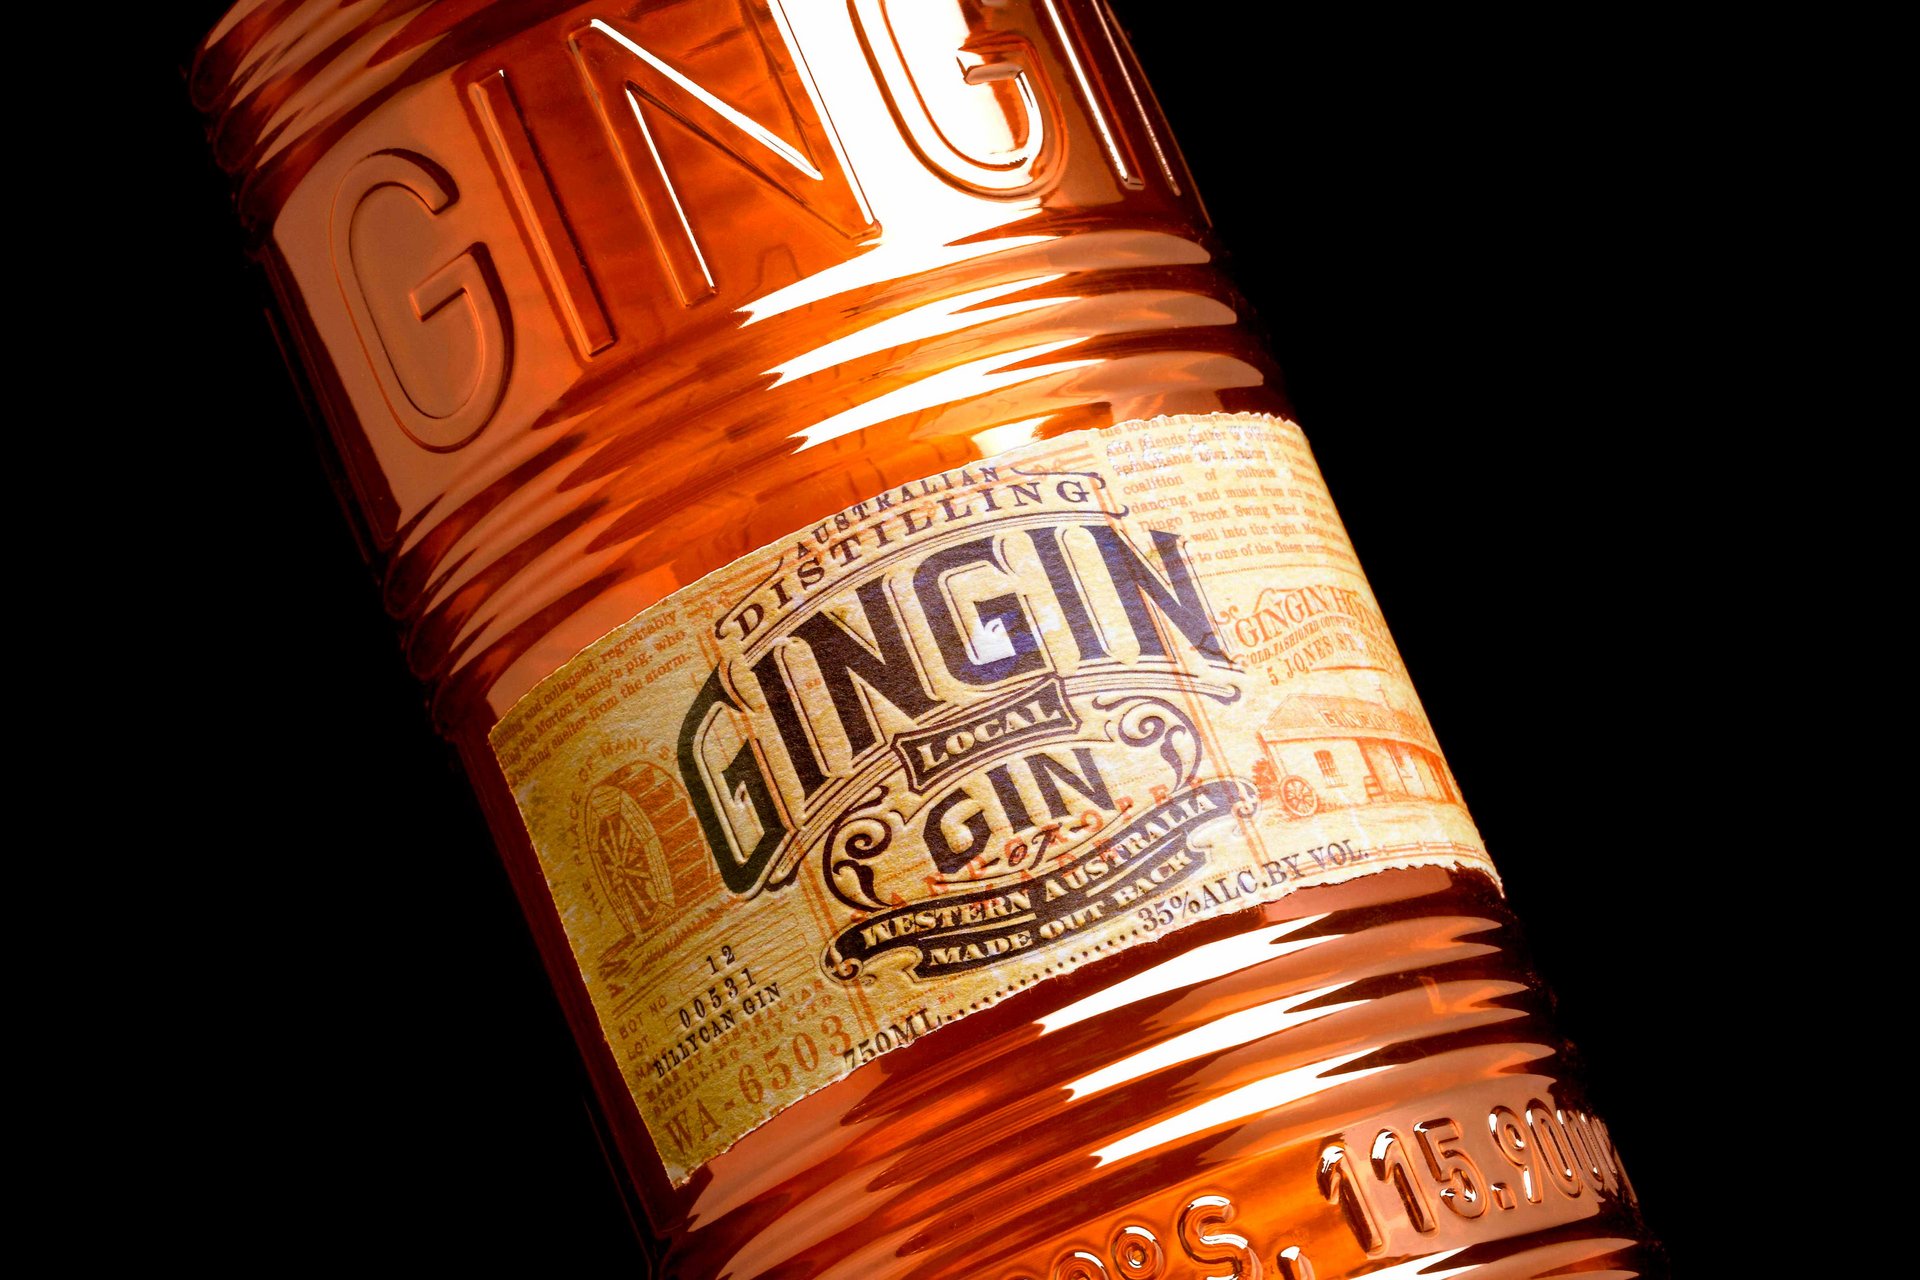 Eminente Rum packaging and branding by Stranger & Stranger - Stranger and  Stranger